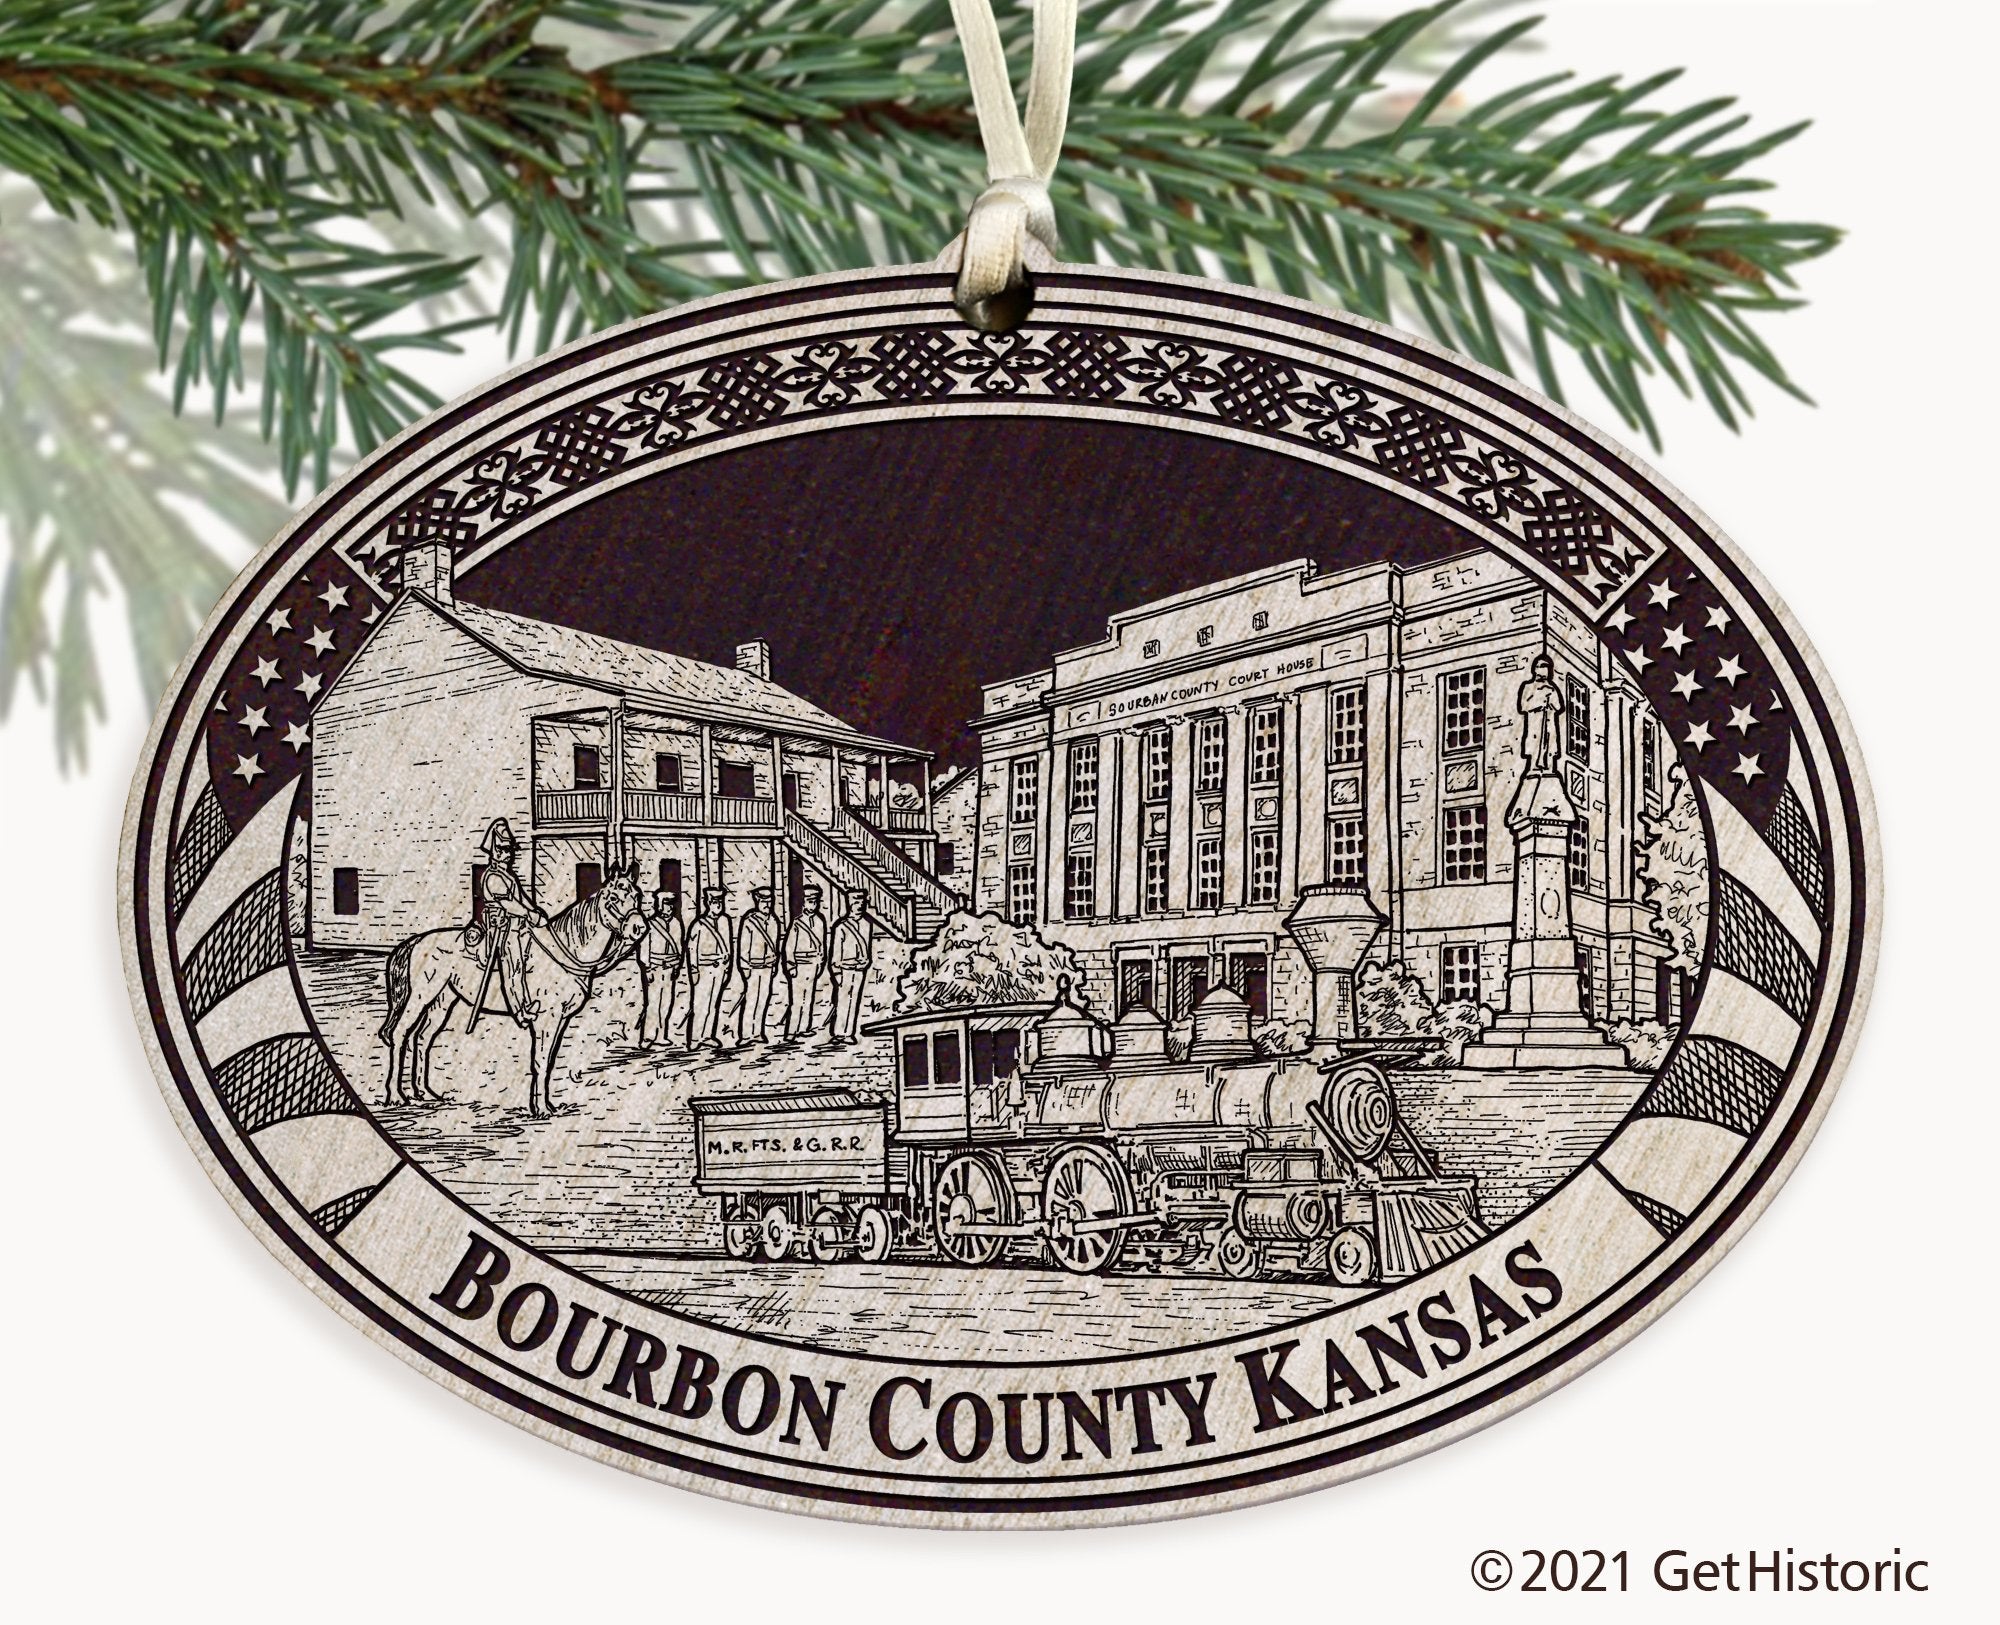 Bourbon County Kansas Engraved Ornament